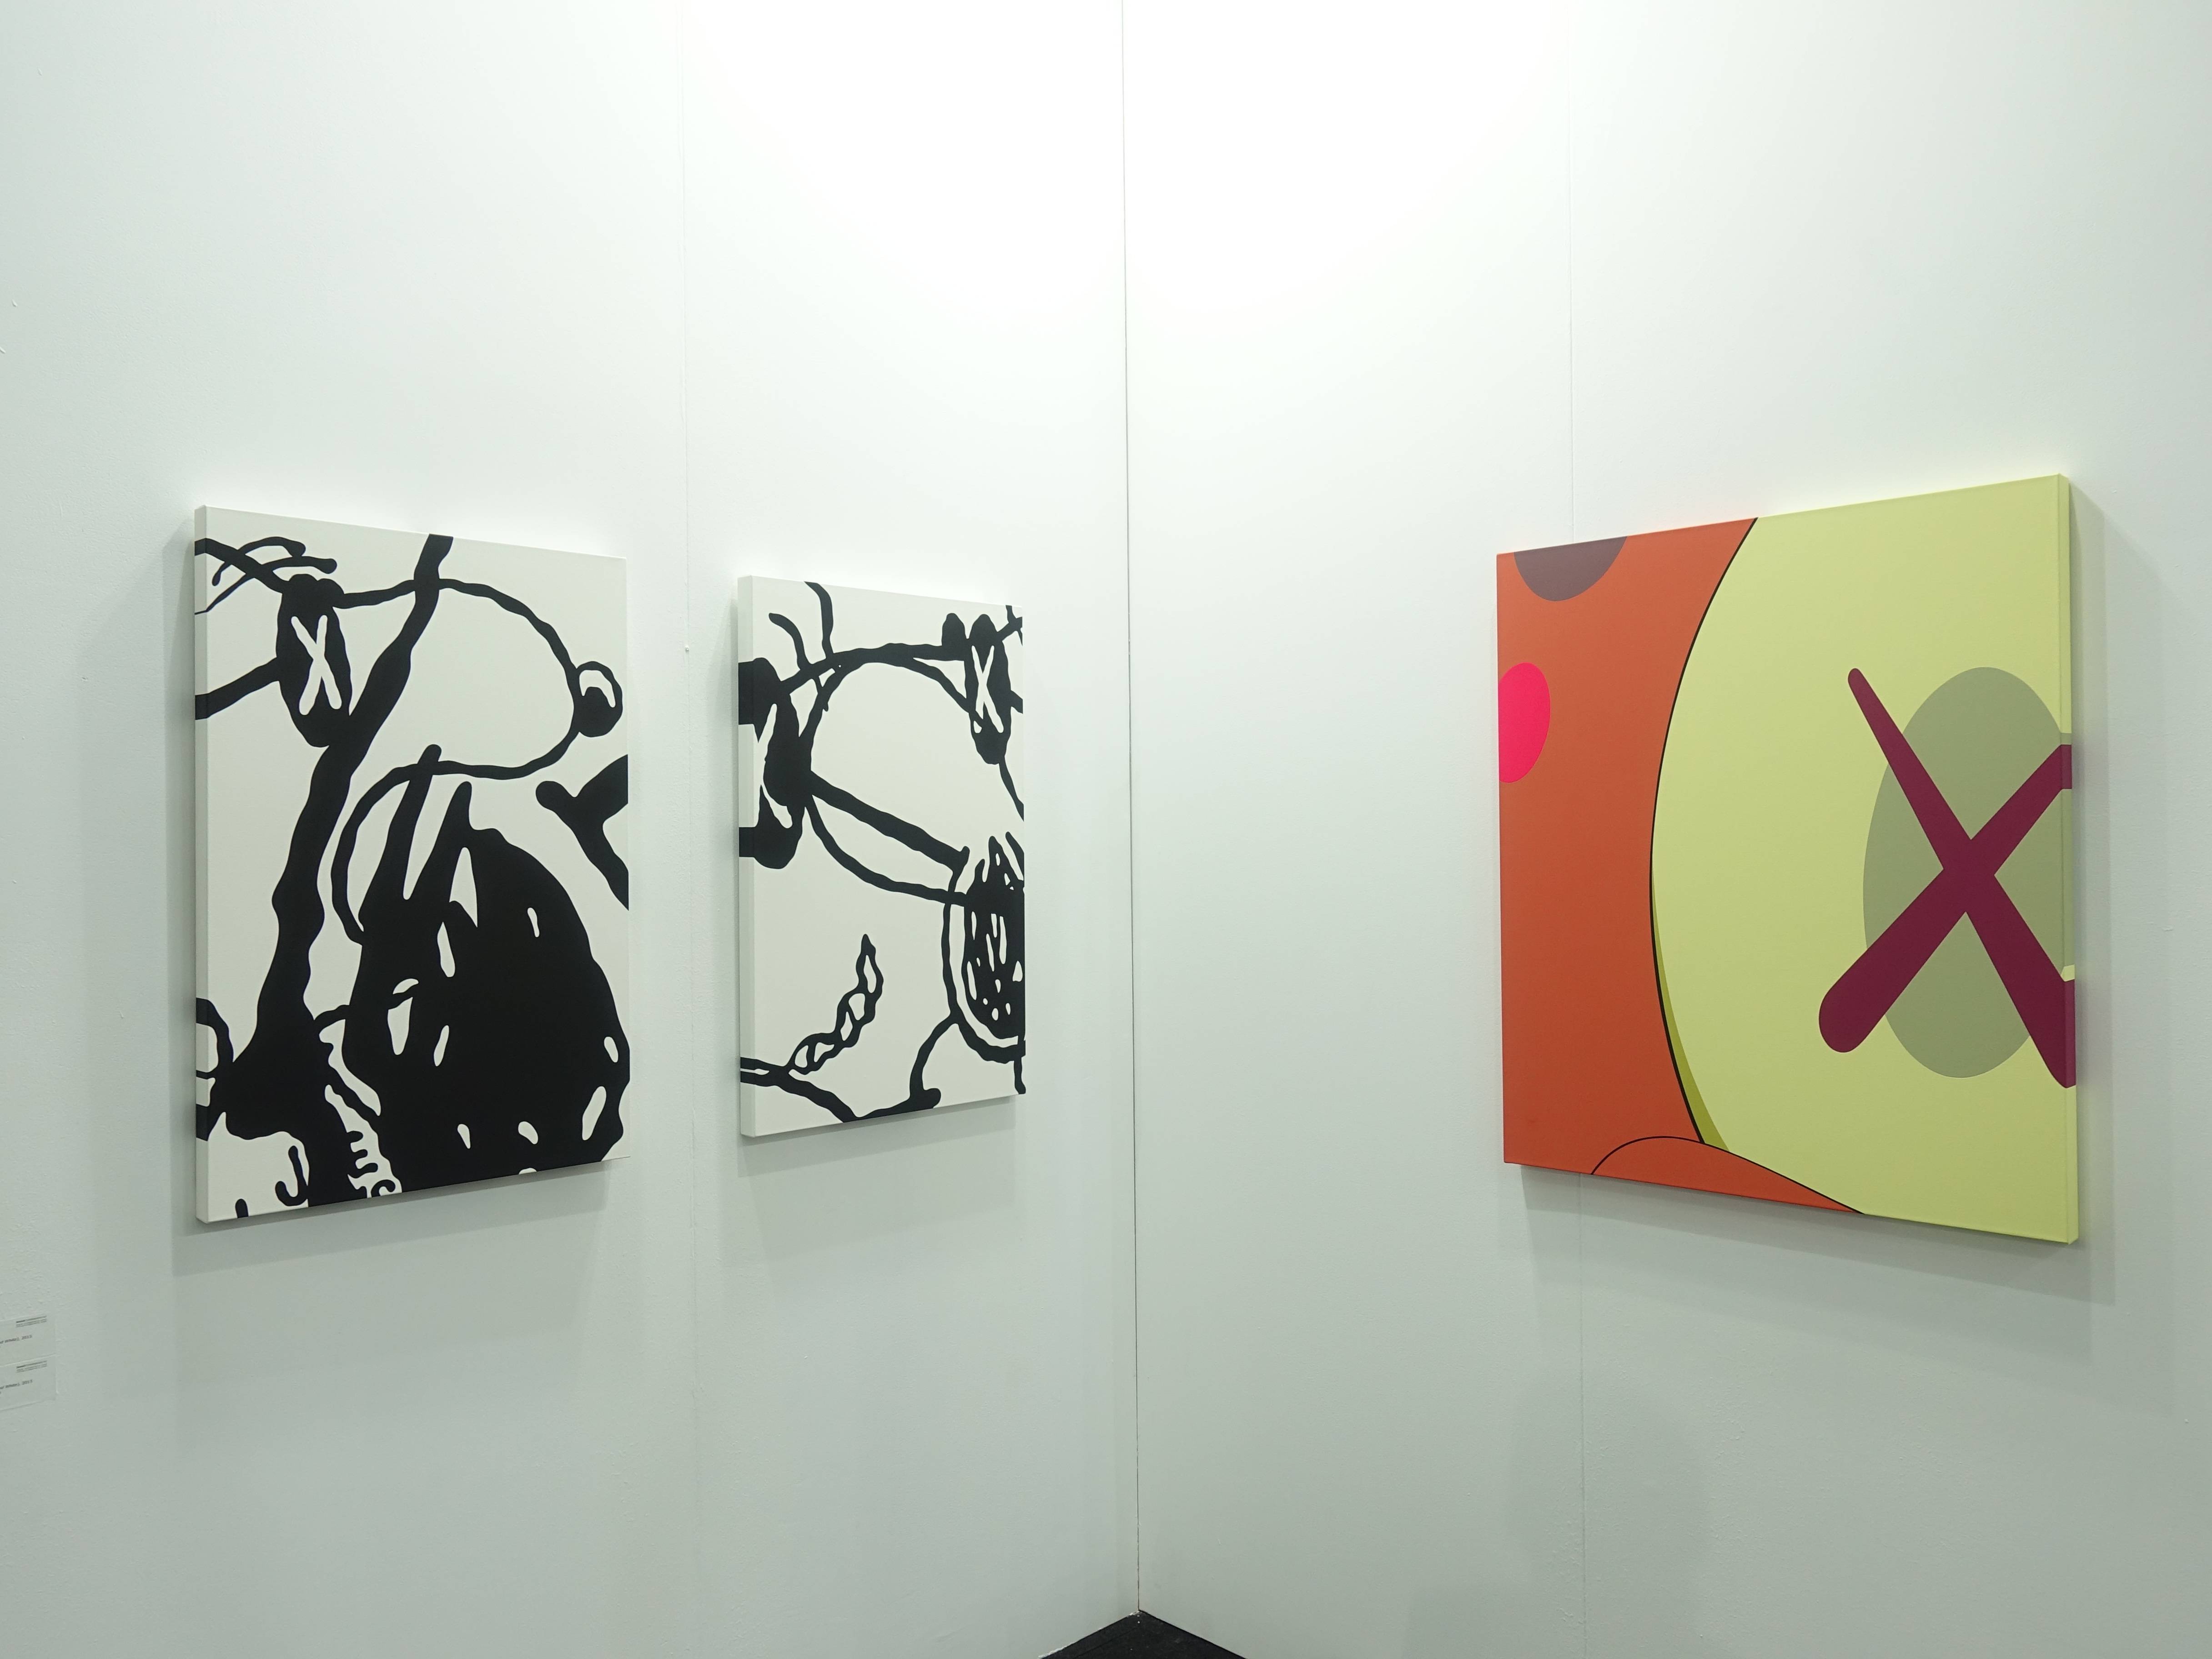 Zemack Contemporary Art現場展出KAWS作品。